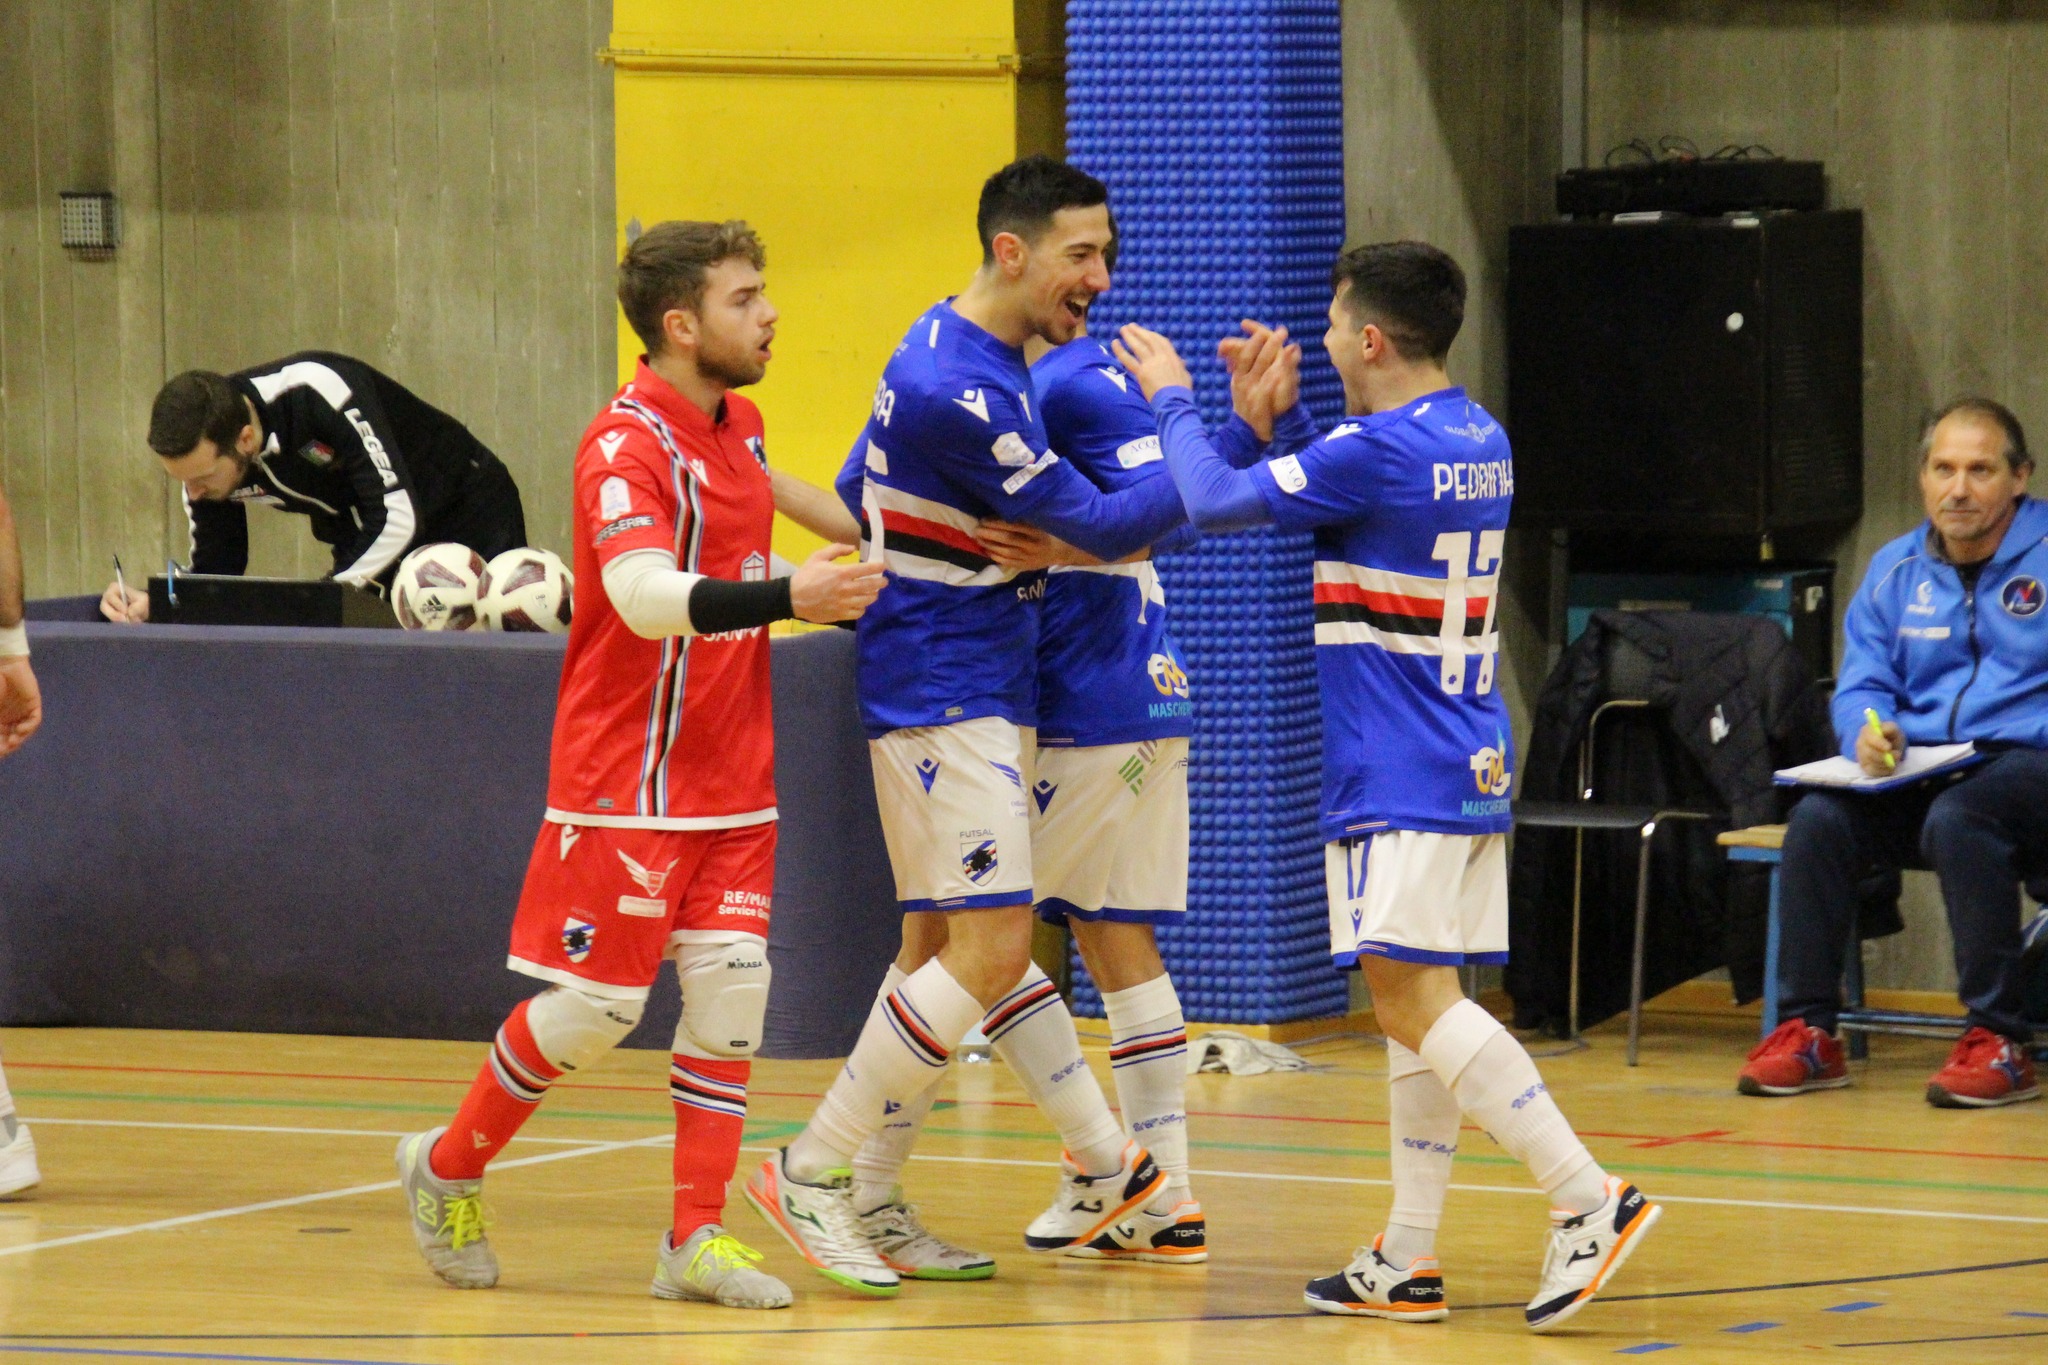 Futsal: Ortisi punisce un’orgogliosa Aosta Calcio 511